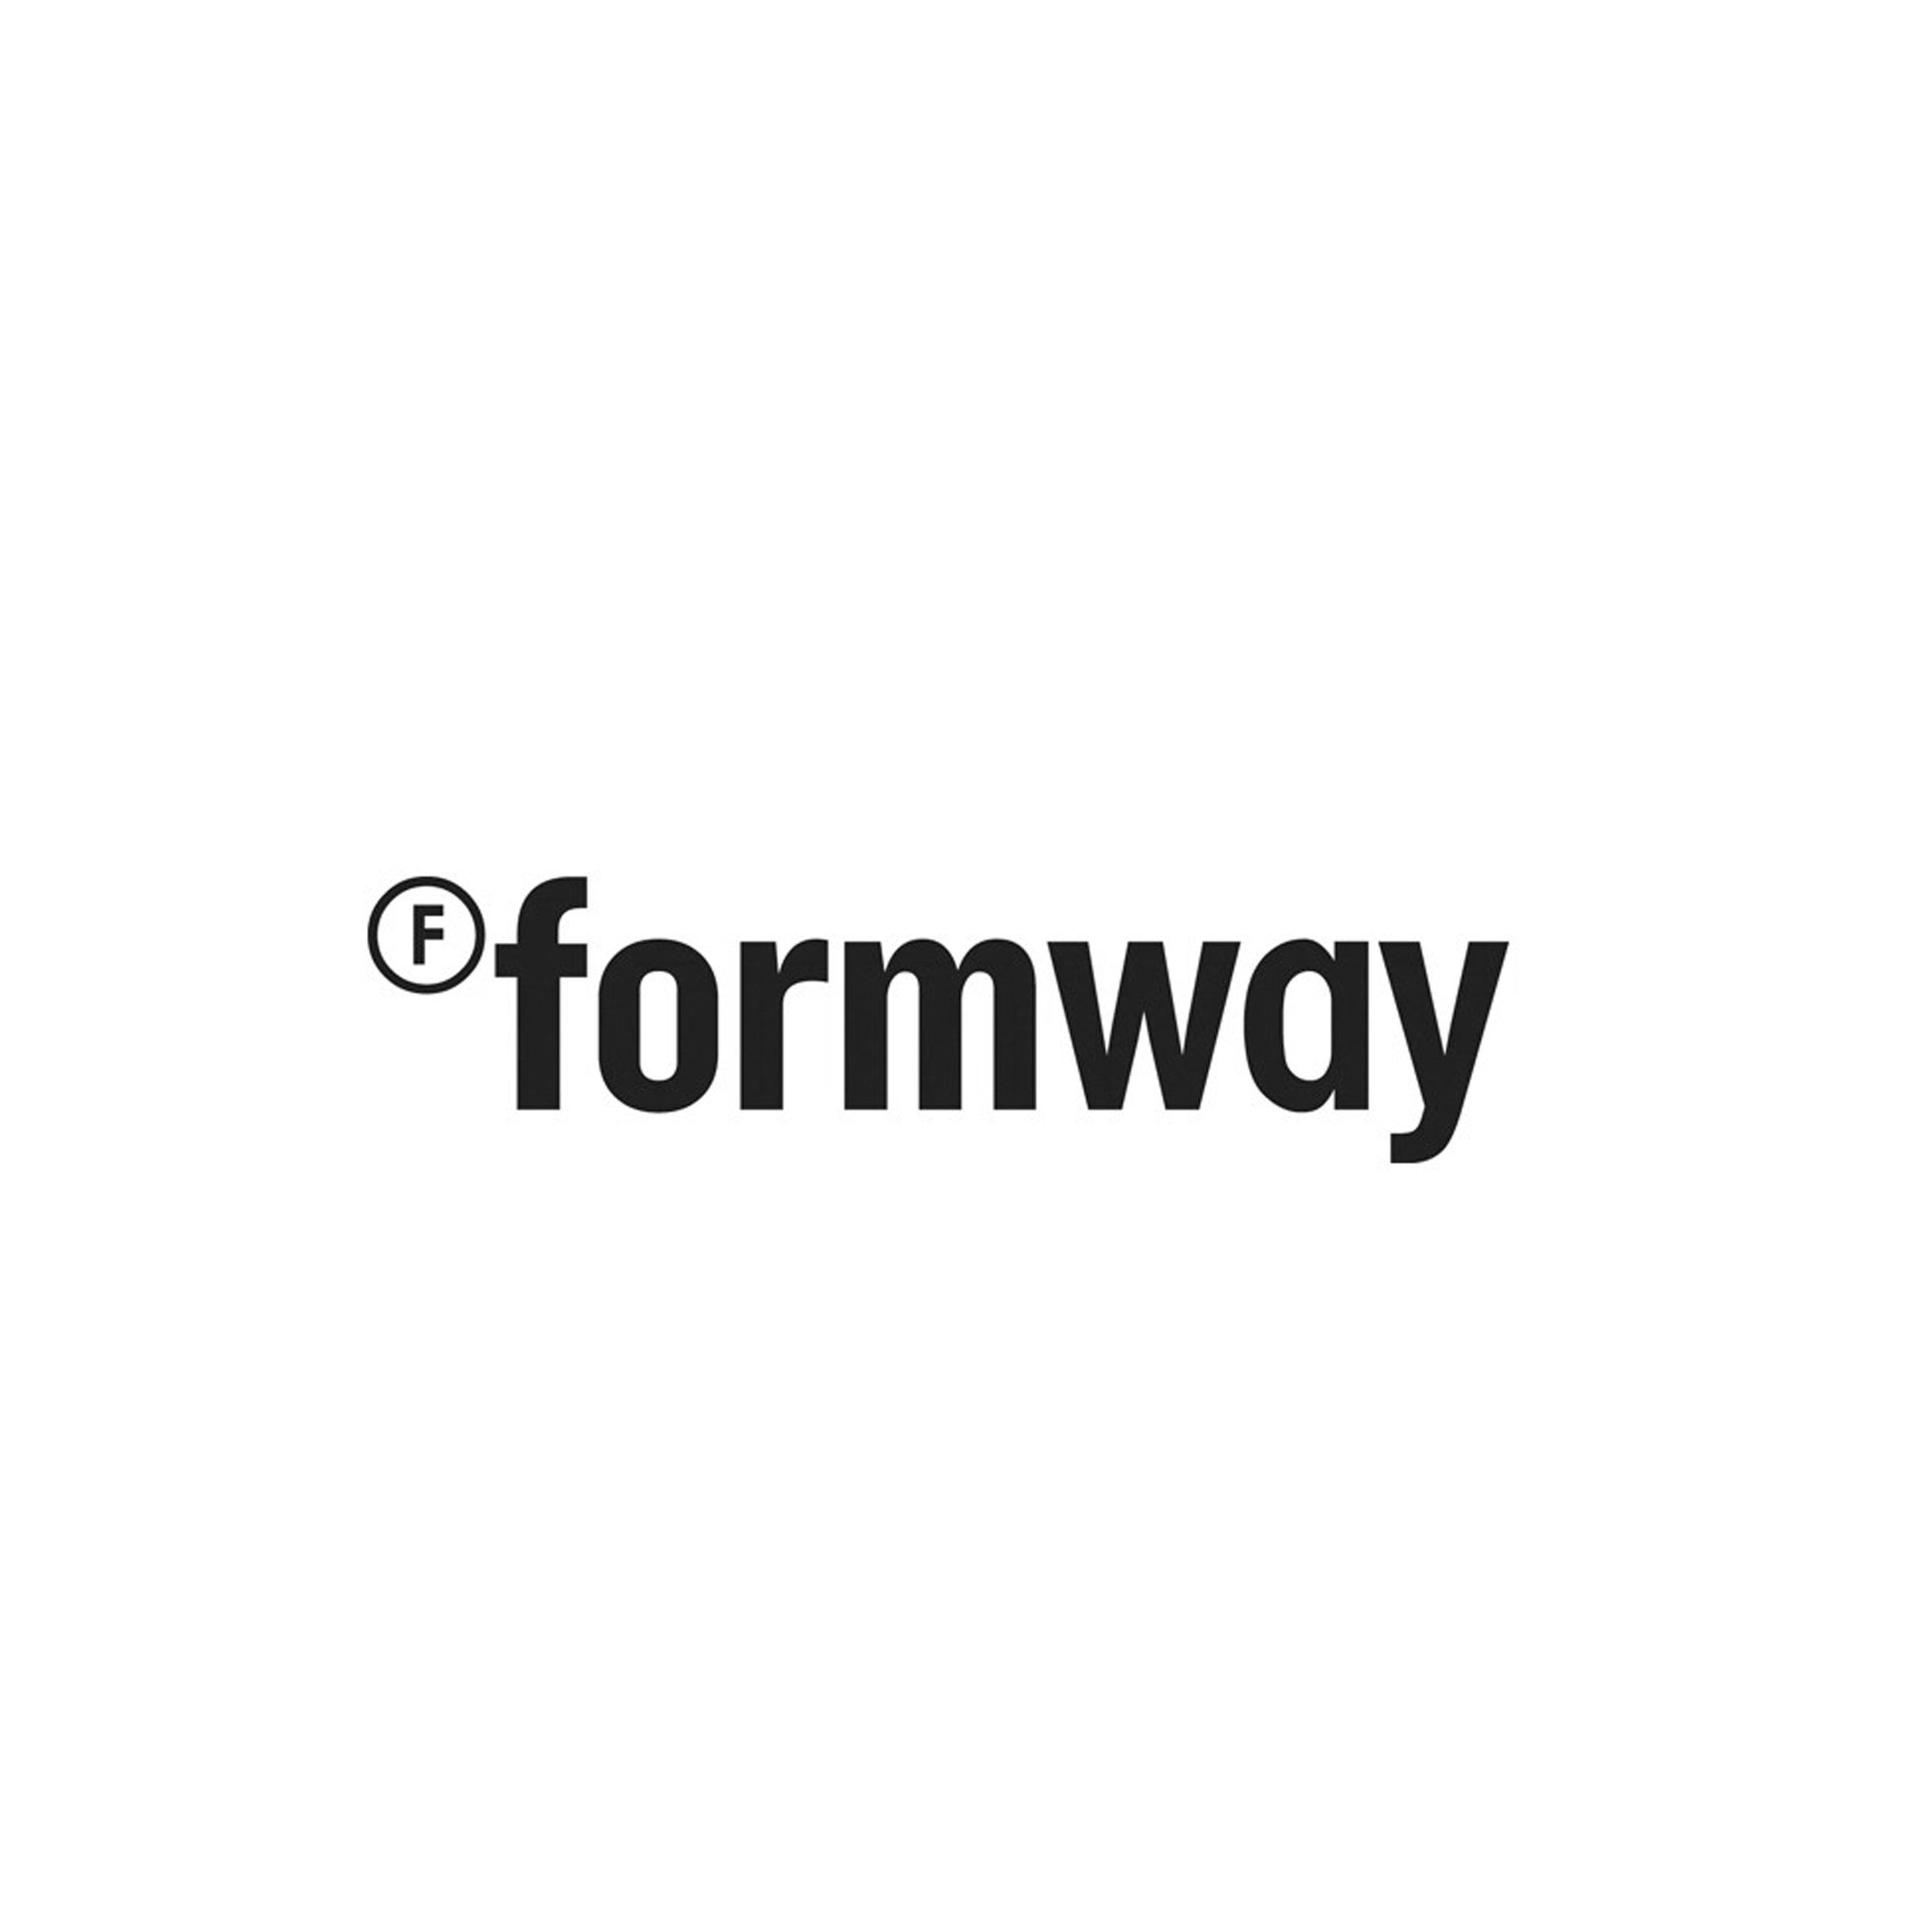 Formway.jpg